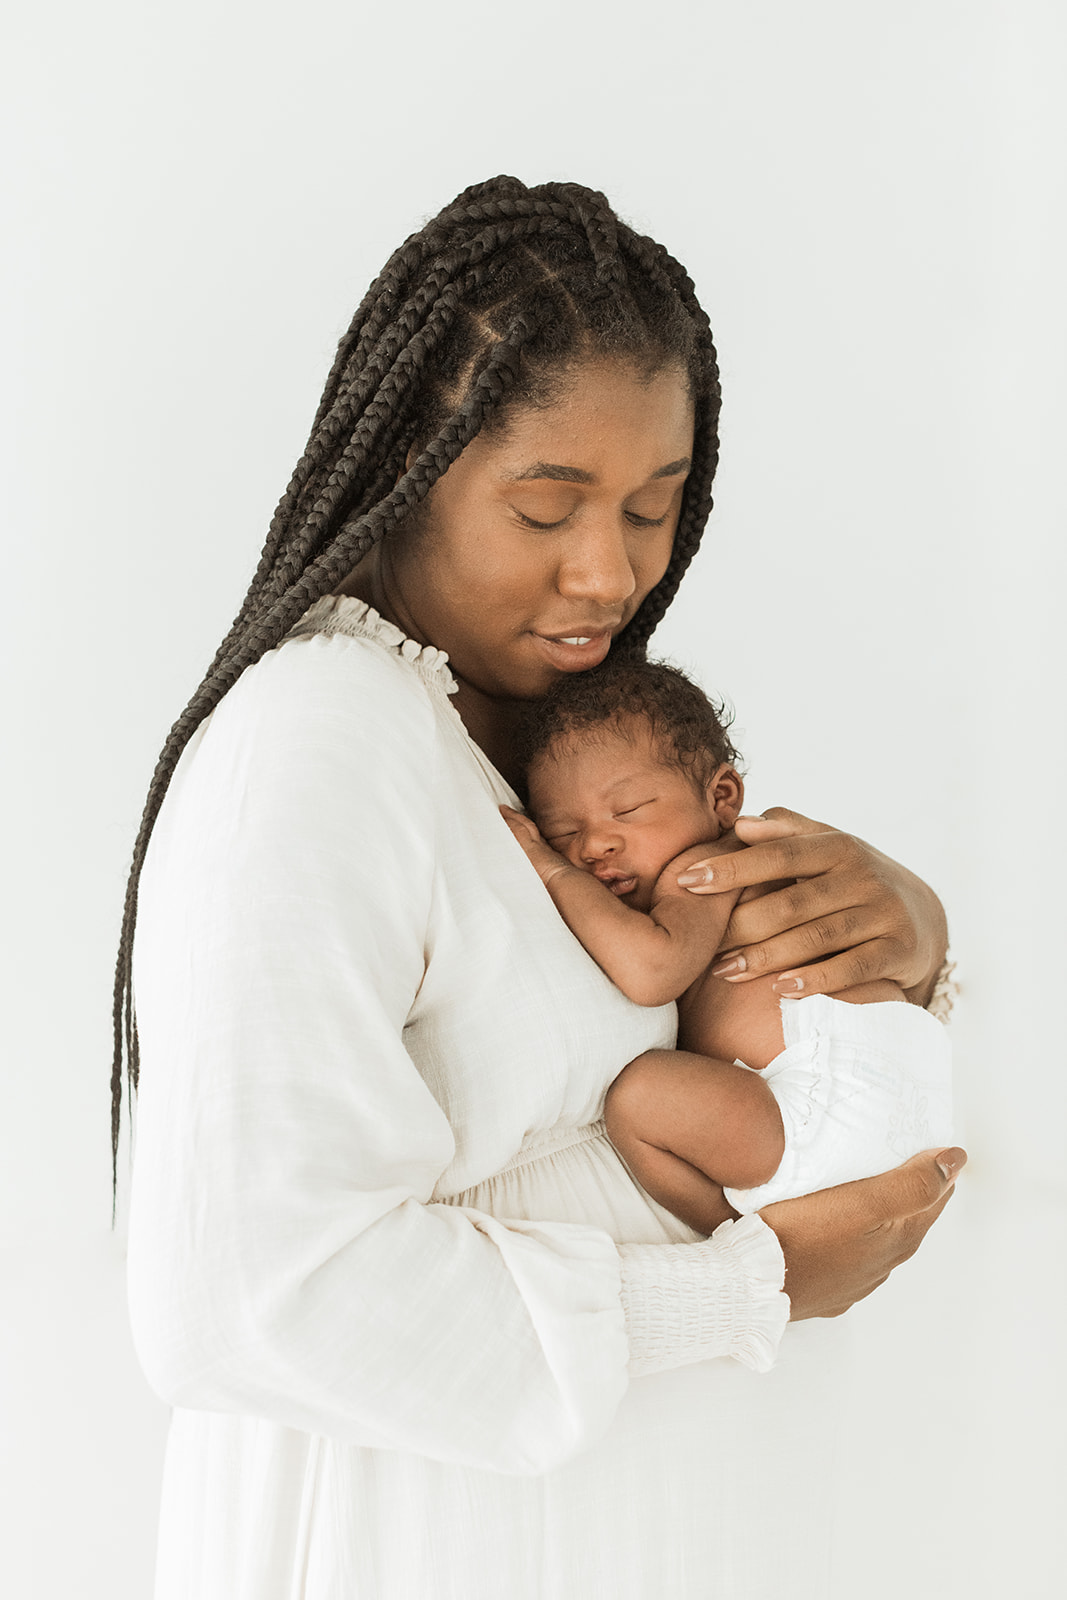 nashville newborn studio photo session. mom and baby boy